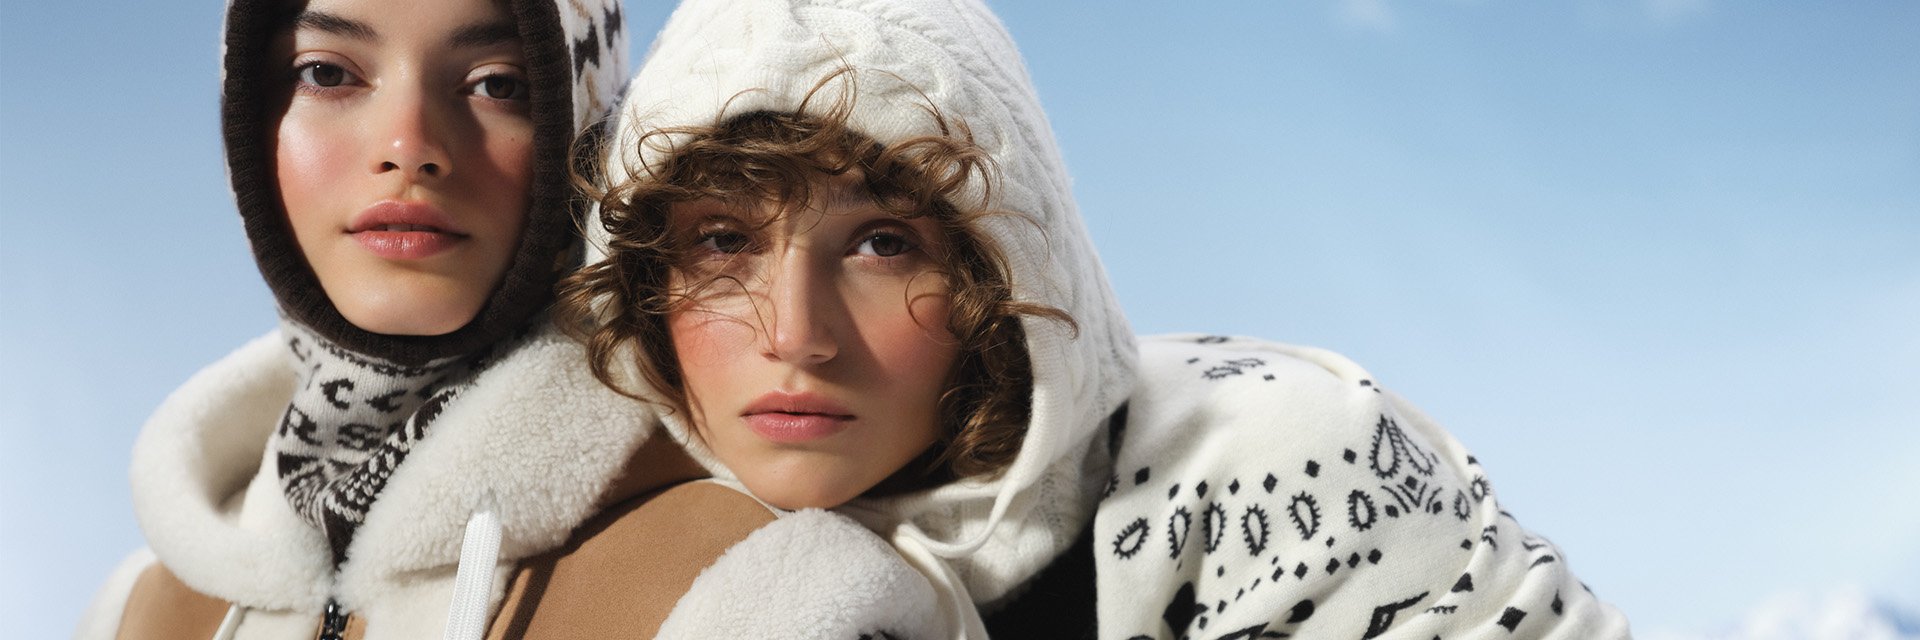 New S'portofino campaign - see how fashion enters the world of sport